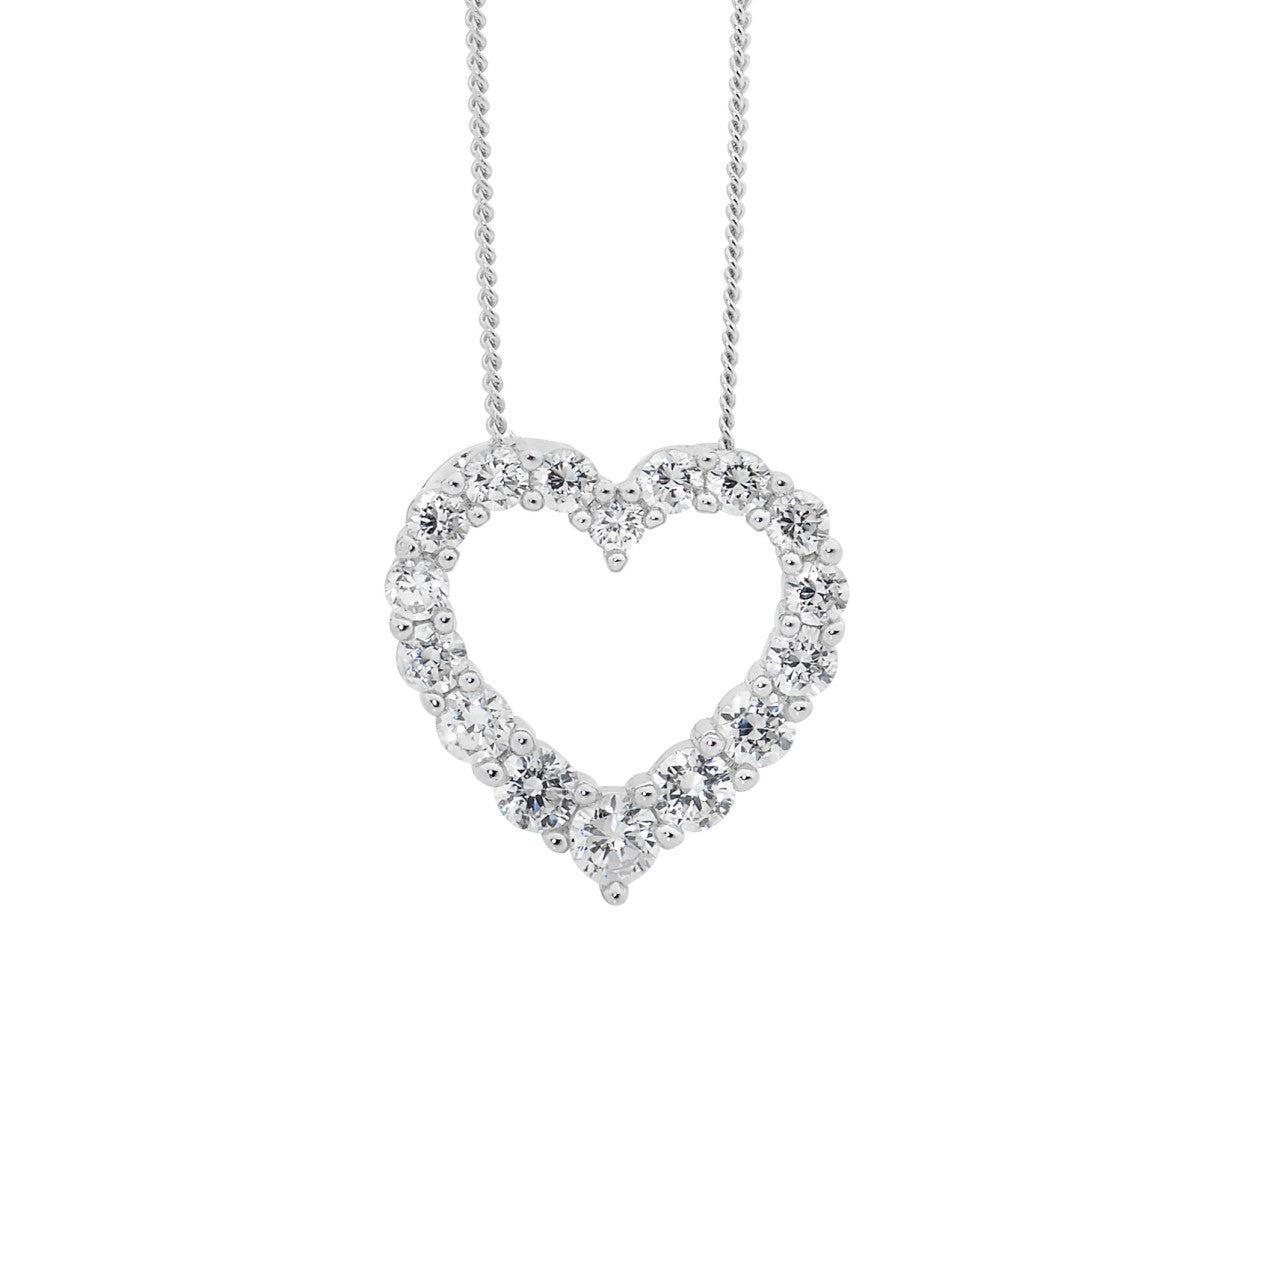 Silver, single CZ set heart pendant and chain